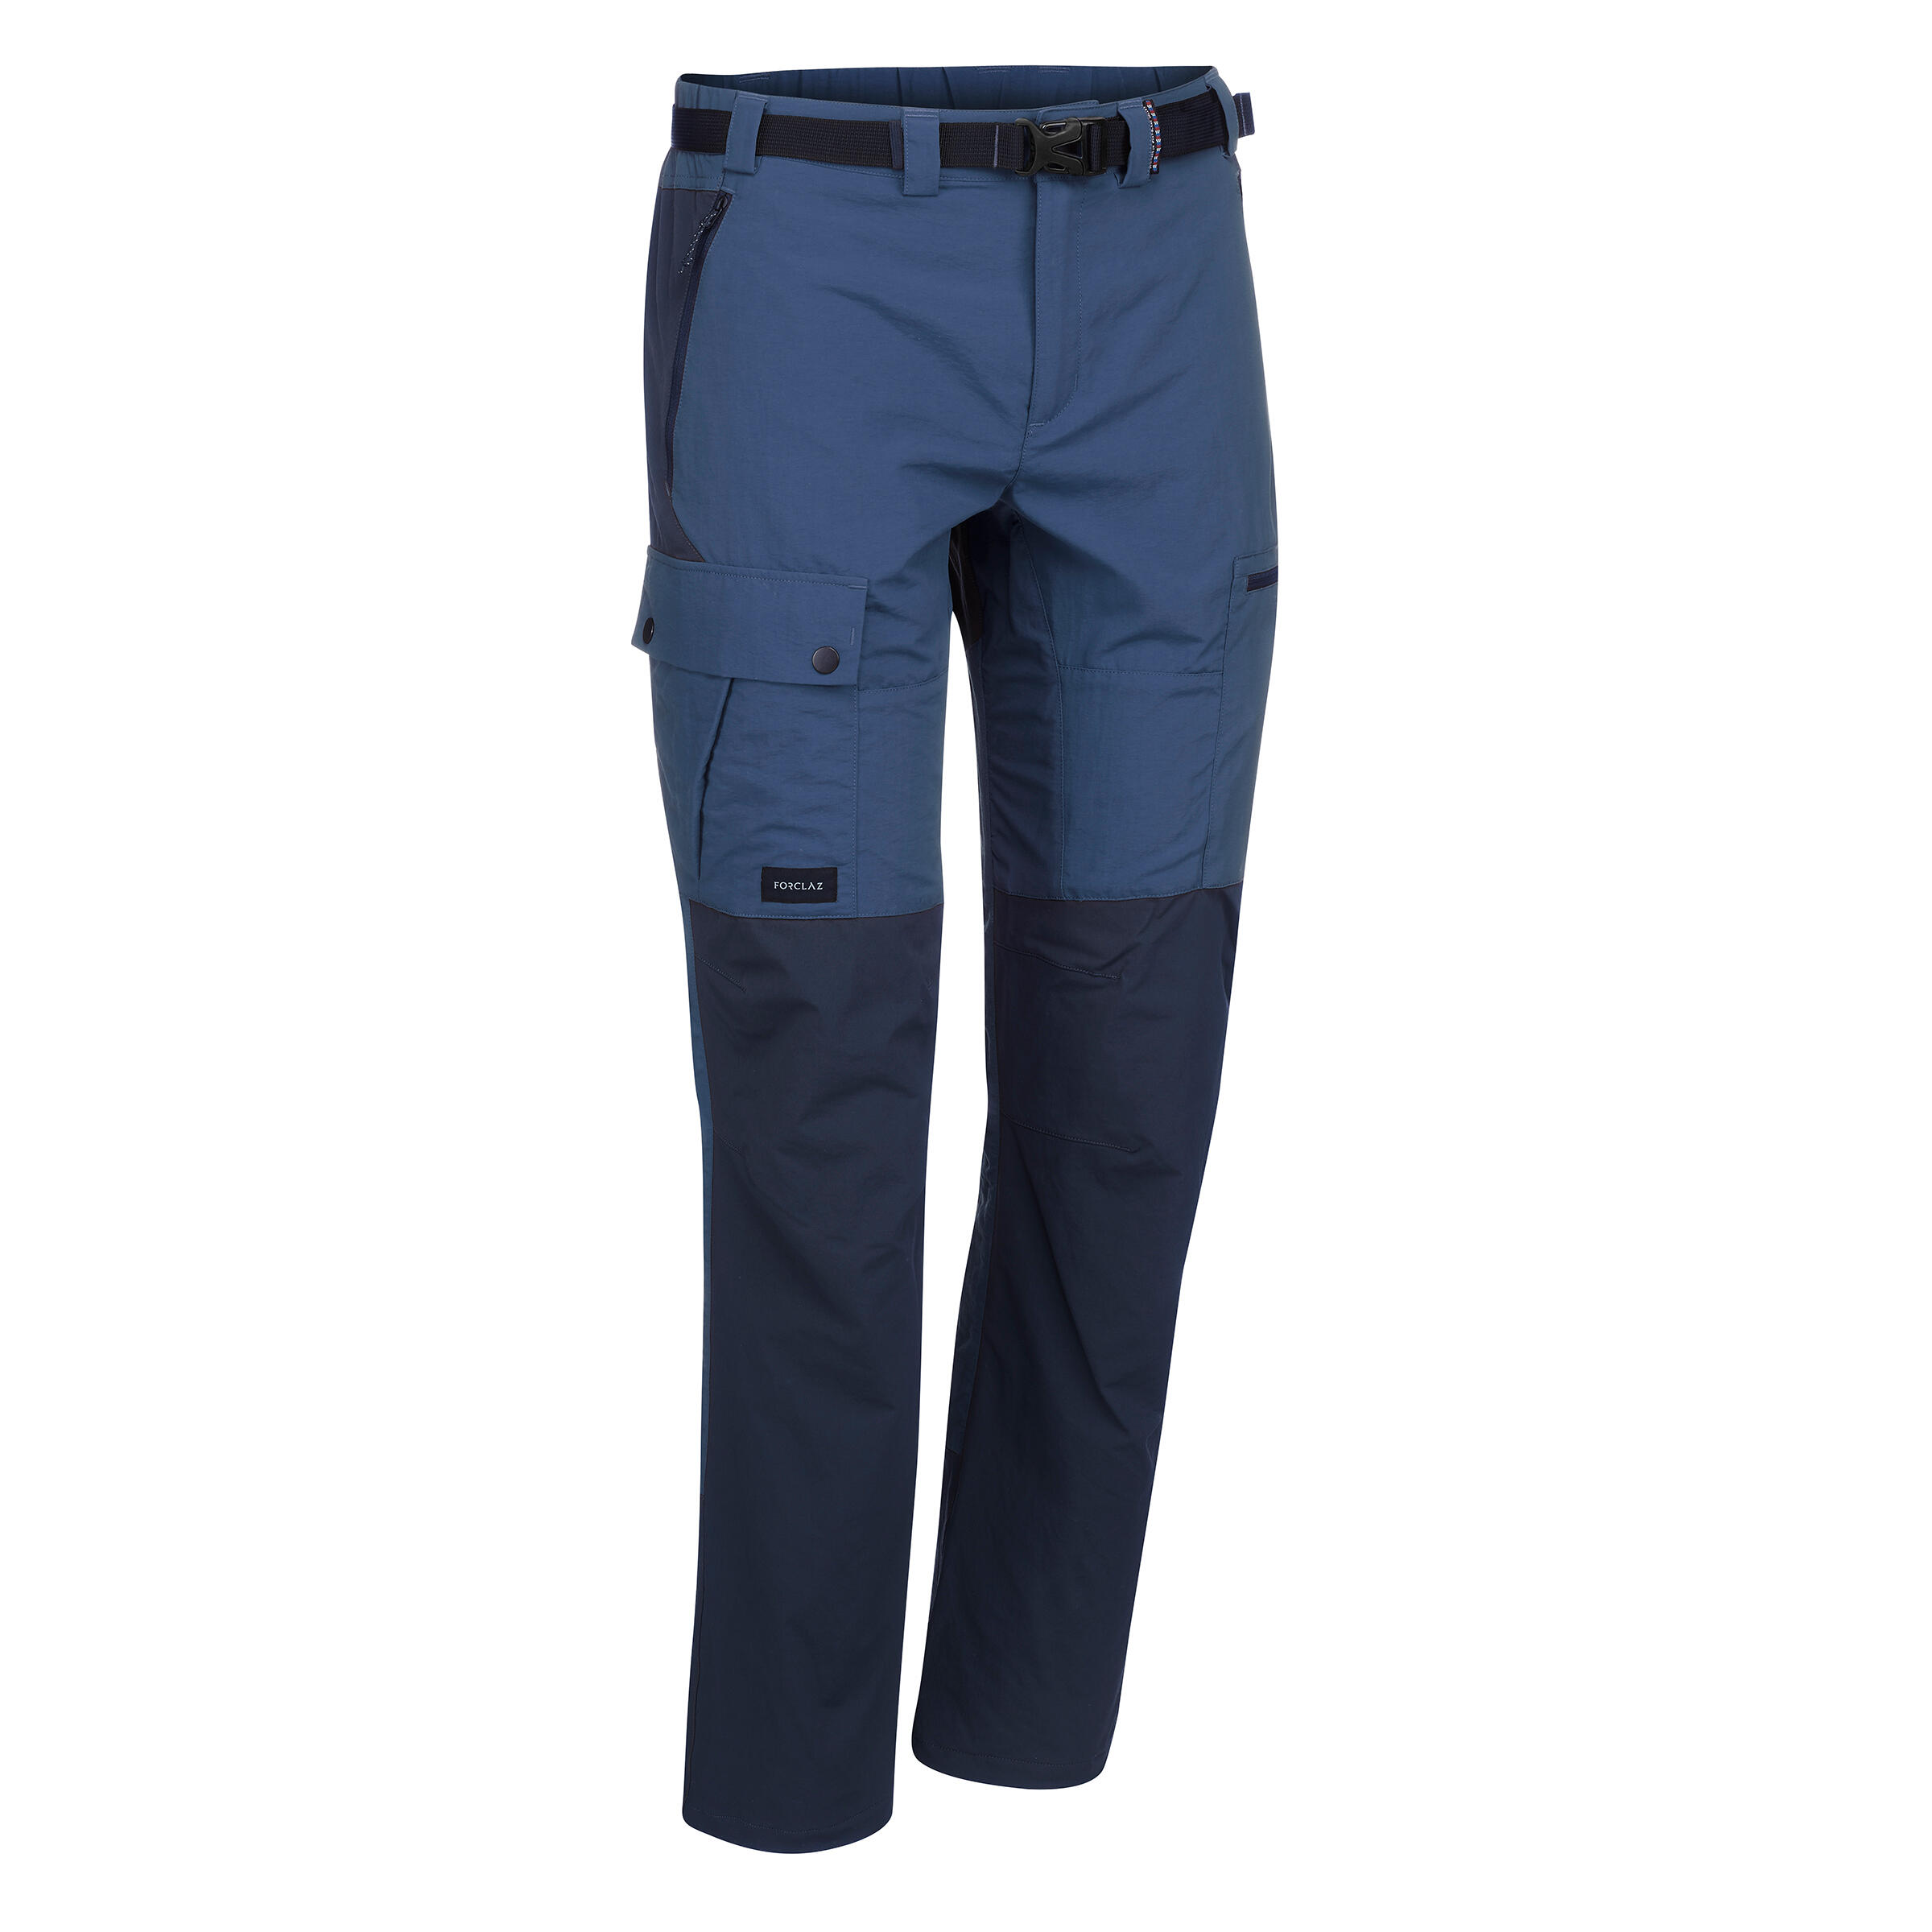 Men's Mountain Trekking Trousers -TREK 500 - Blue 1/13